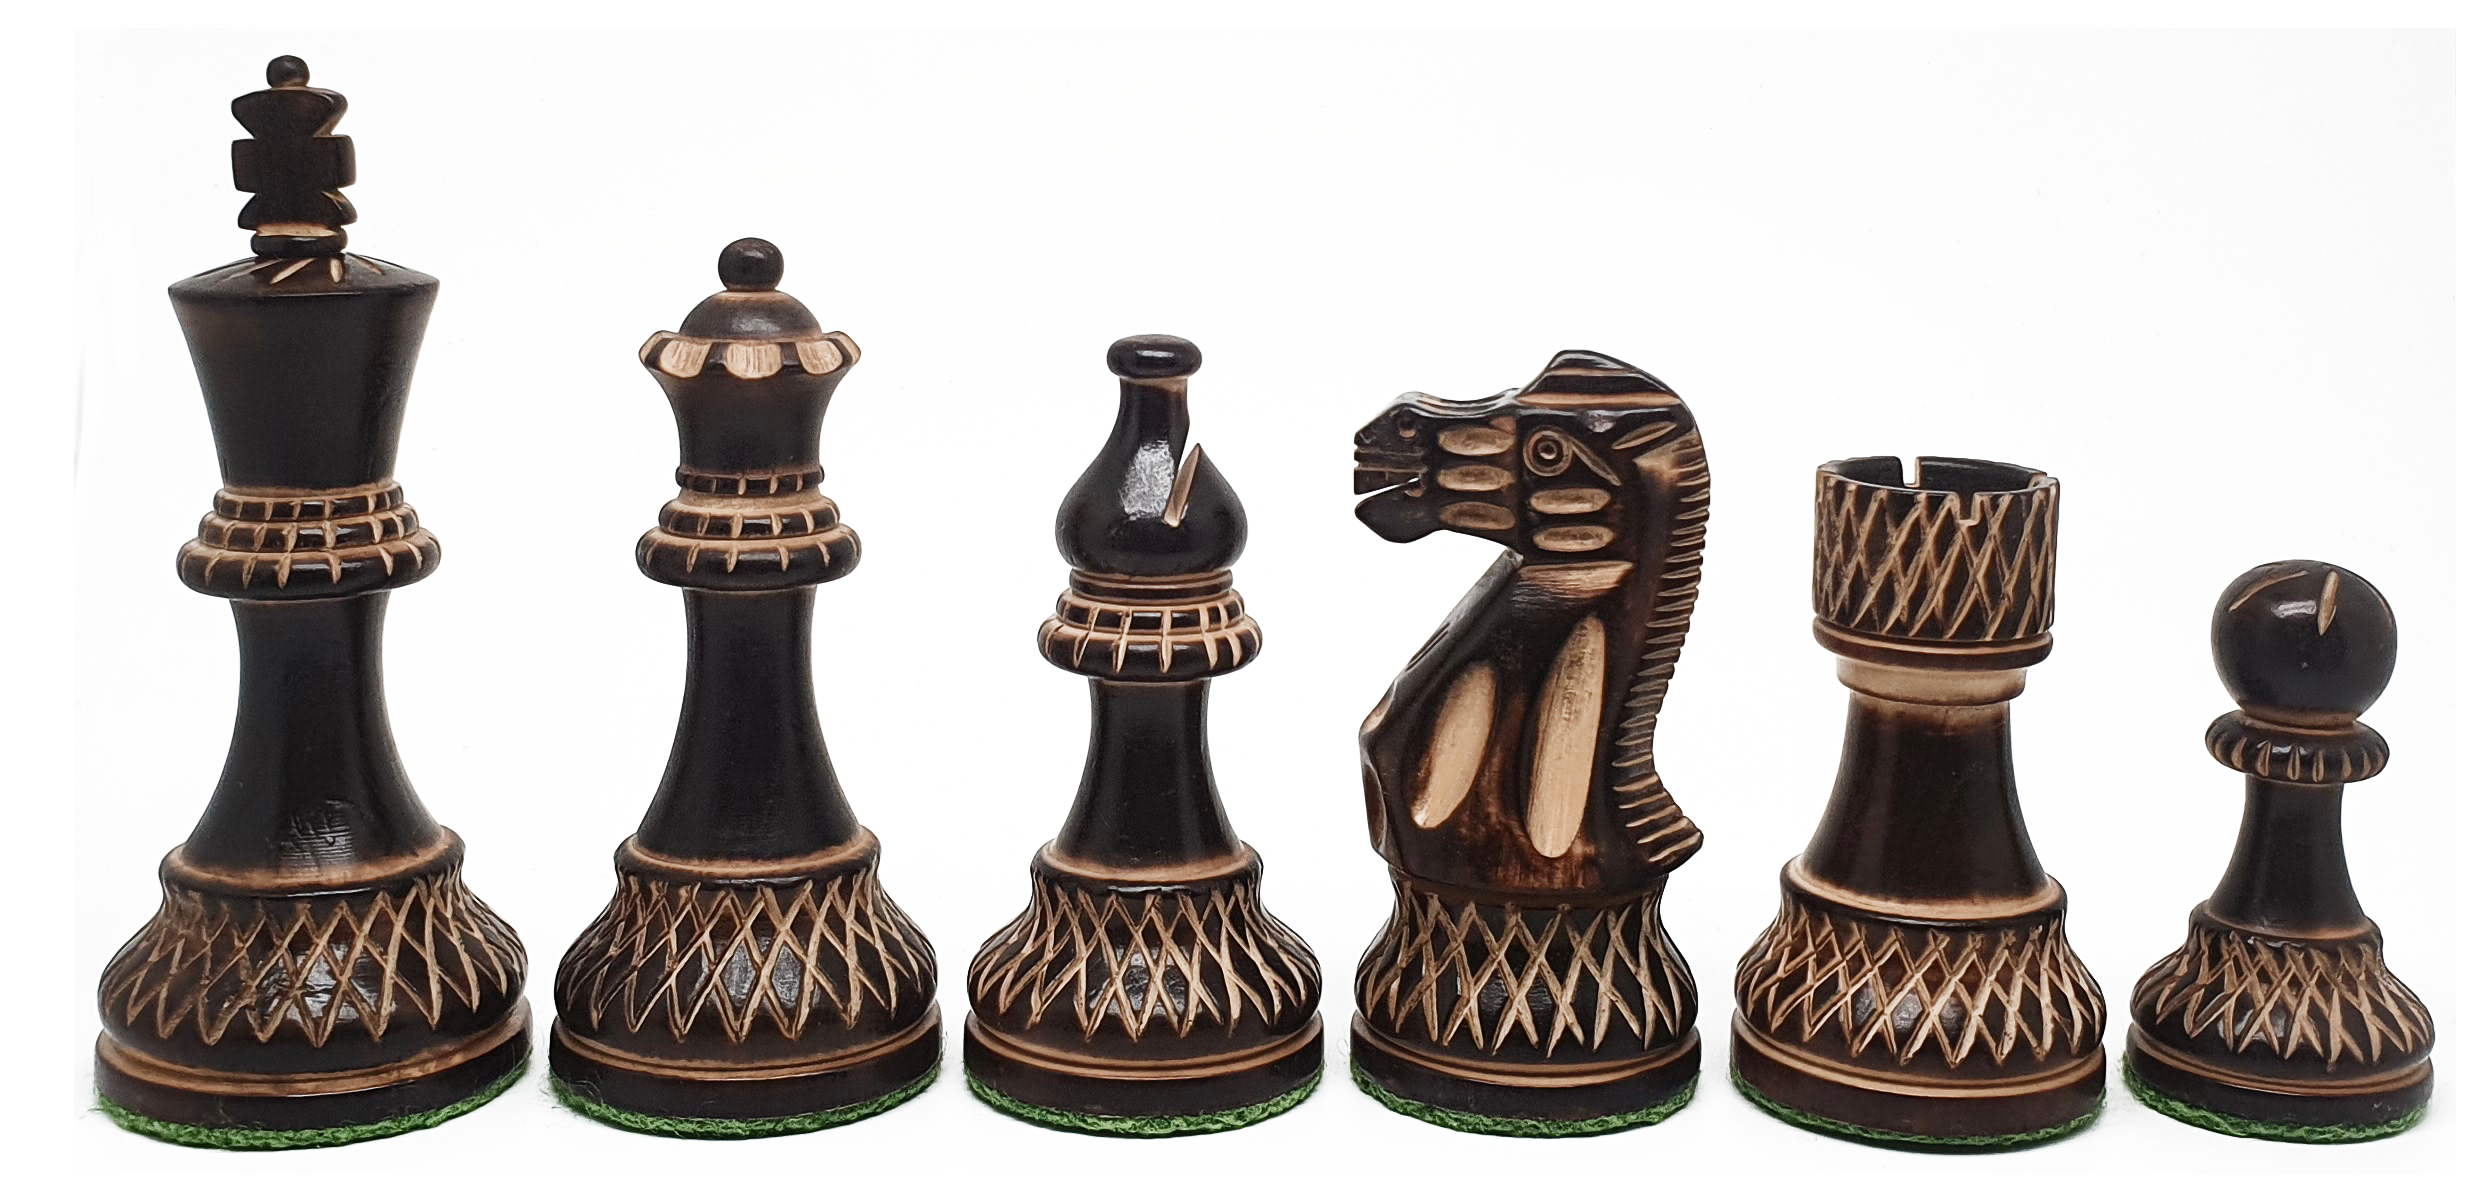 VI/ Piezas de ajedrez modelo Burnt Classic "3.75" Ebanizado.